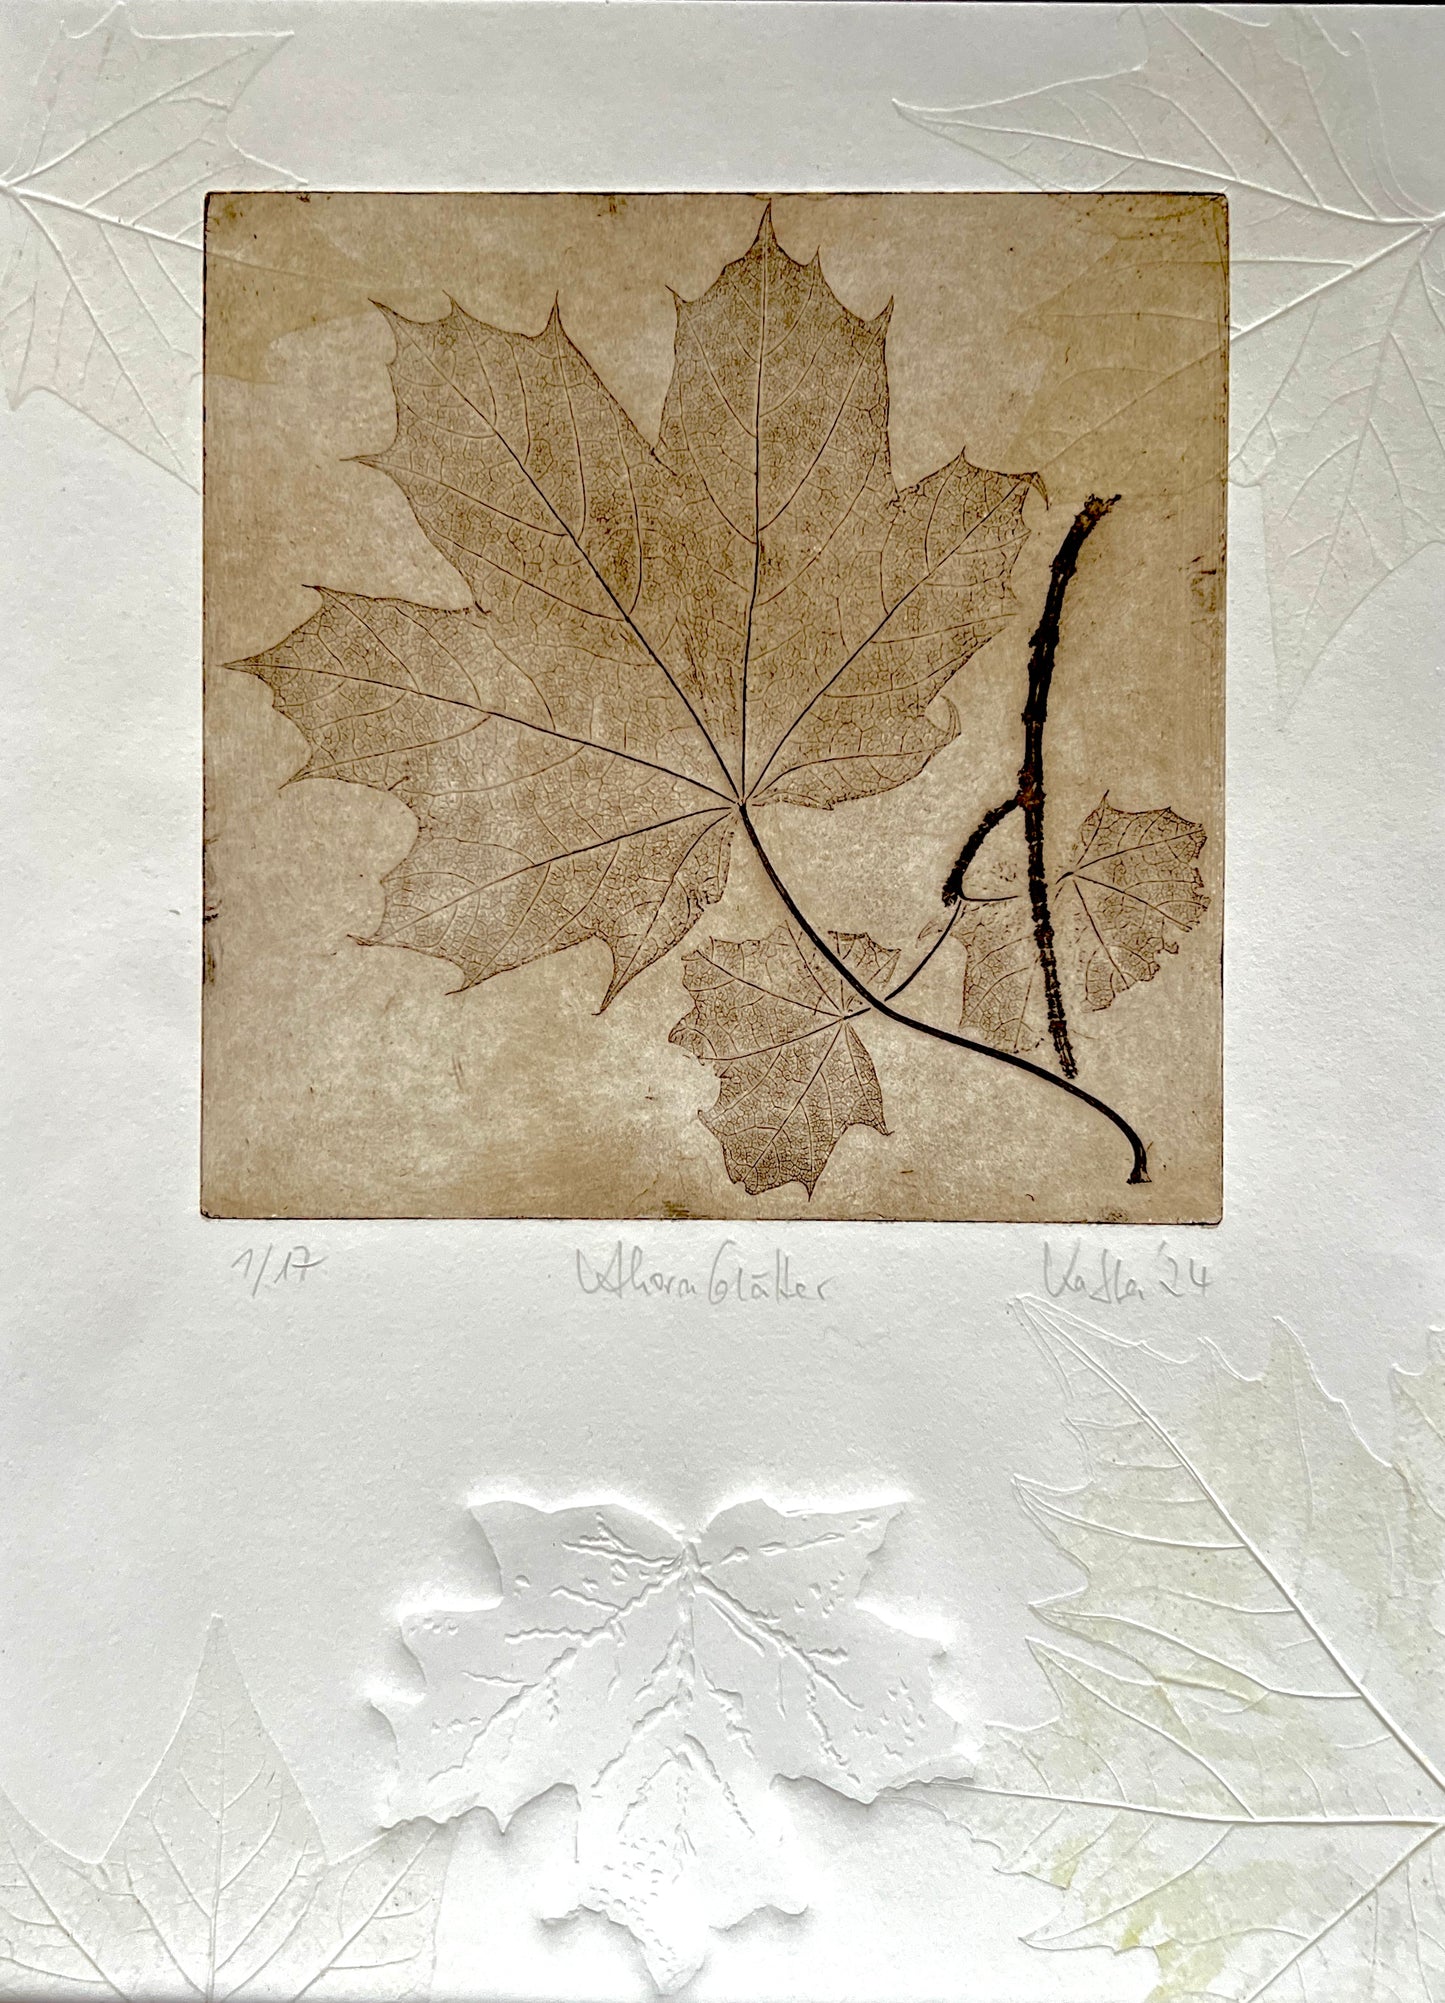 ARCE impresión original grabado vernis mou con relieve 30x40 cm